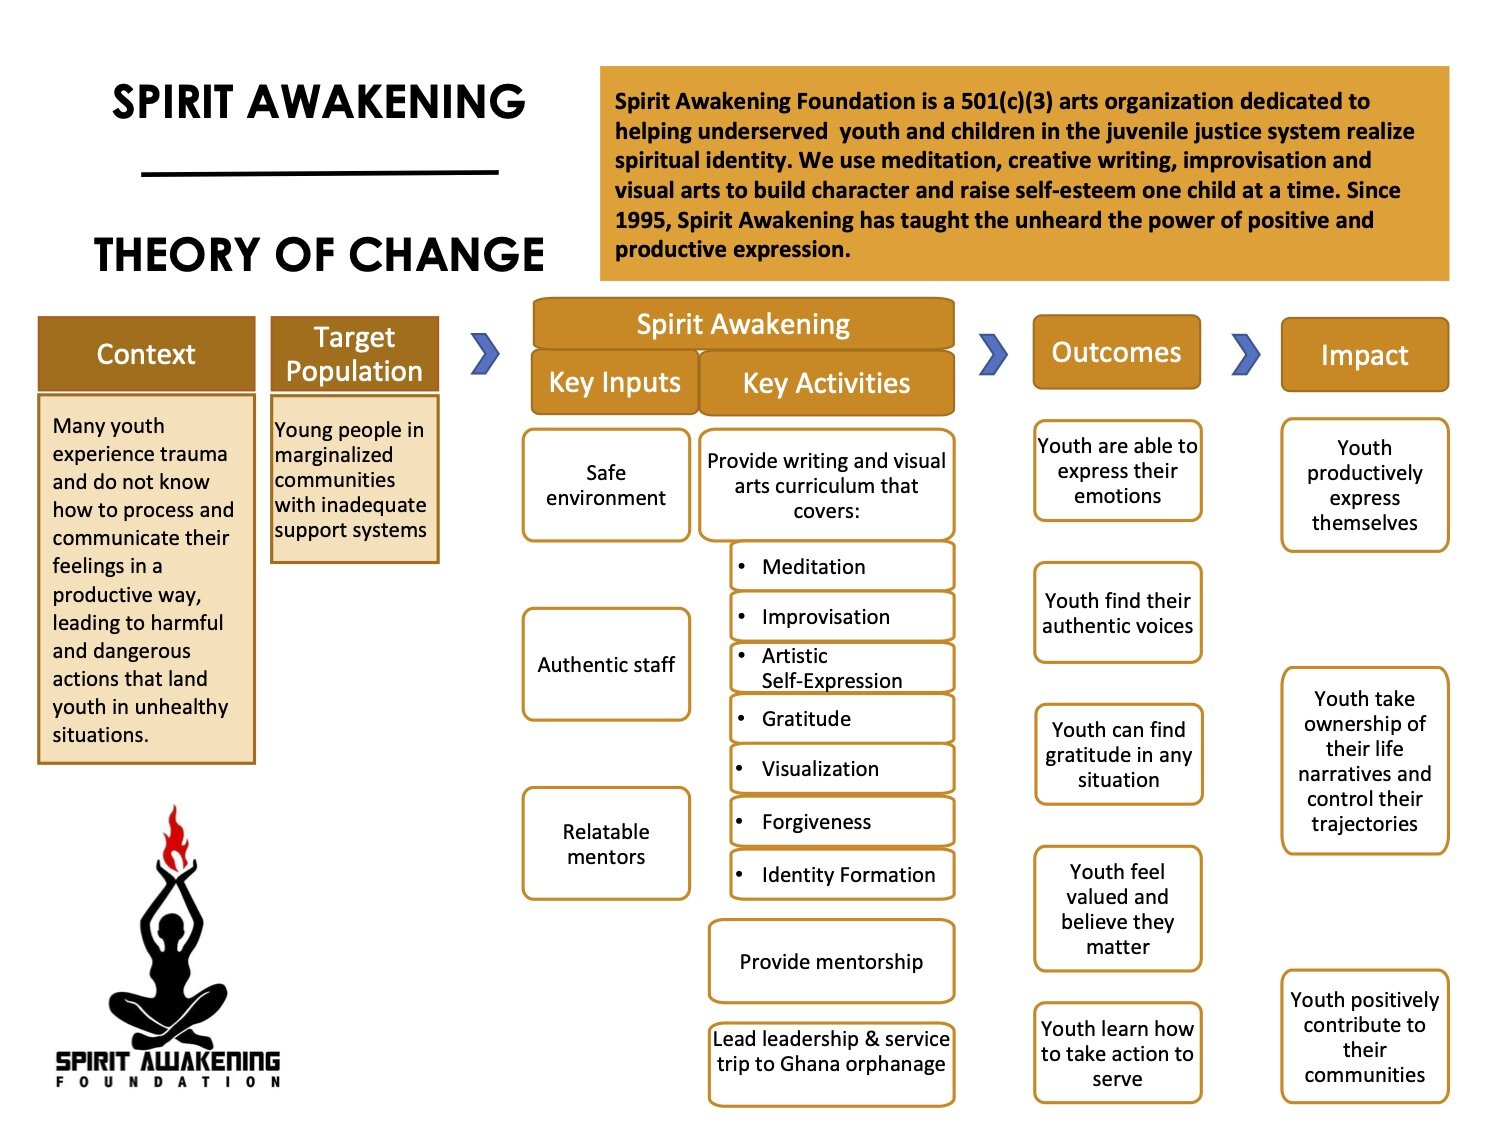 Spirit Awakening's Theory of Change